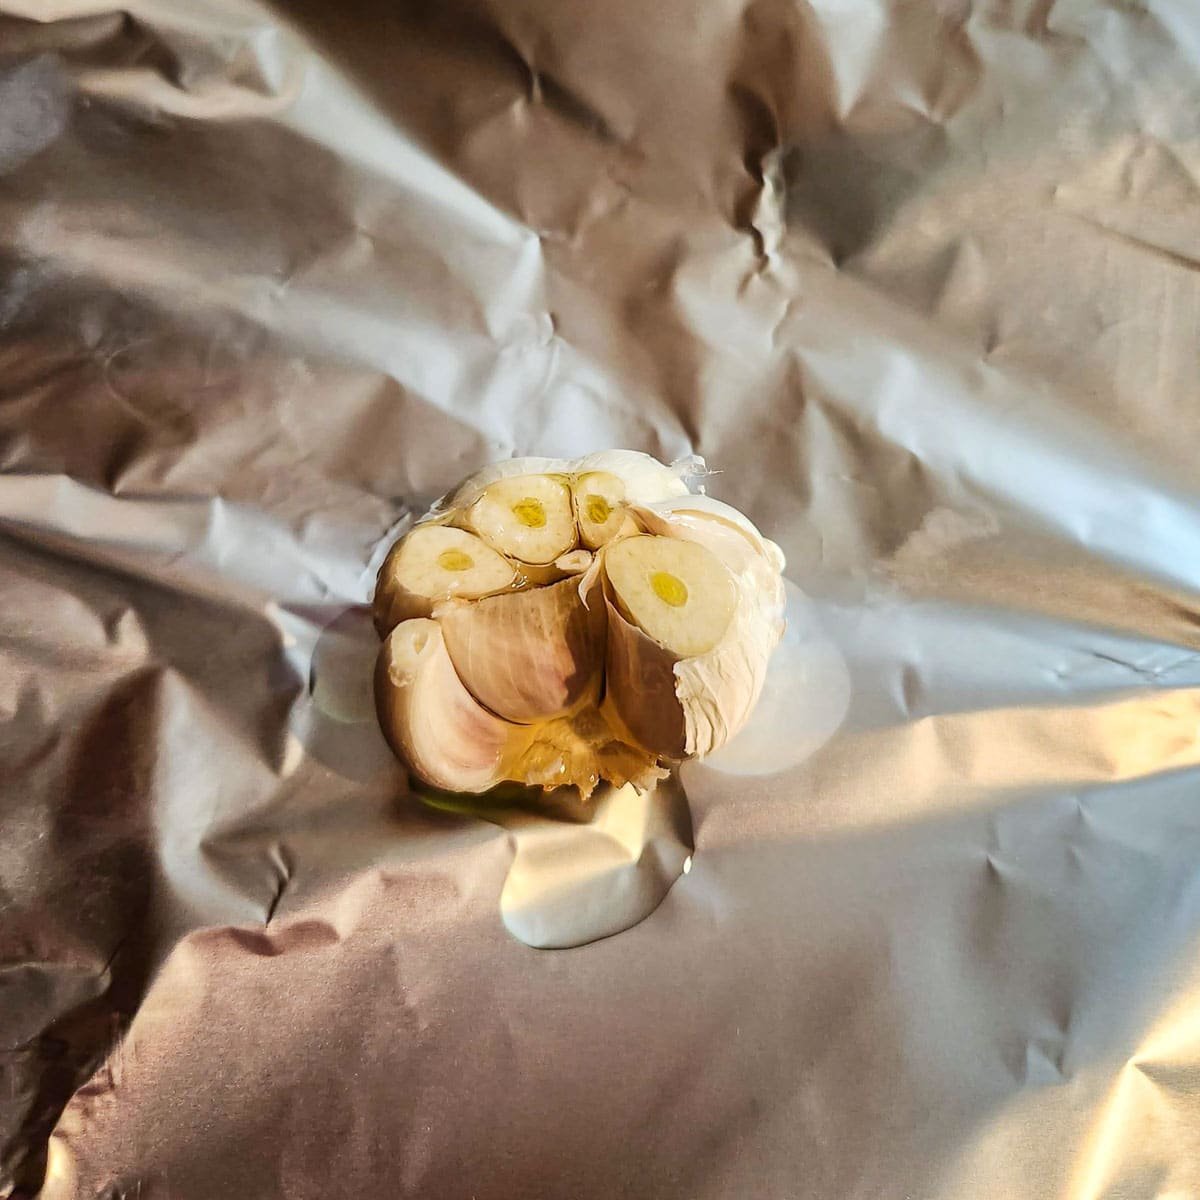 garlic head in foil with oil